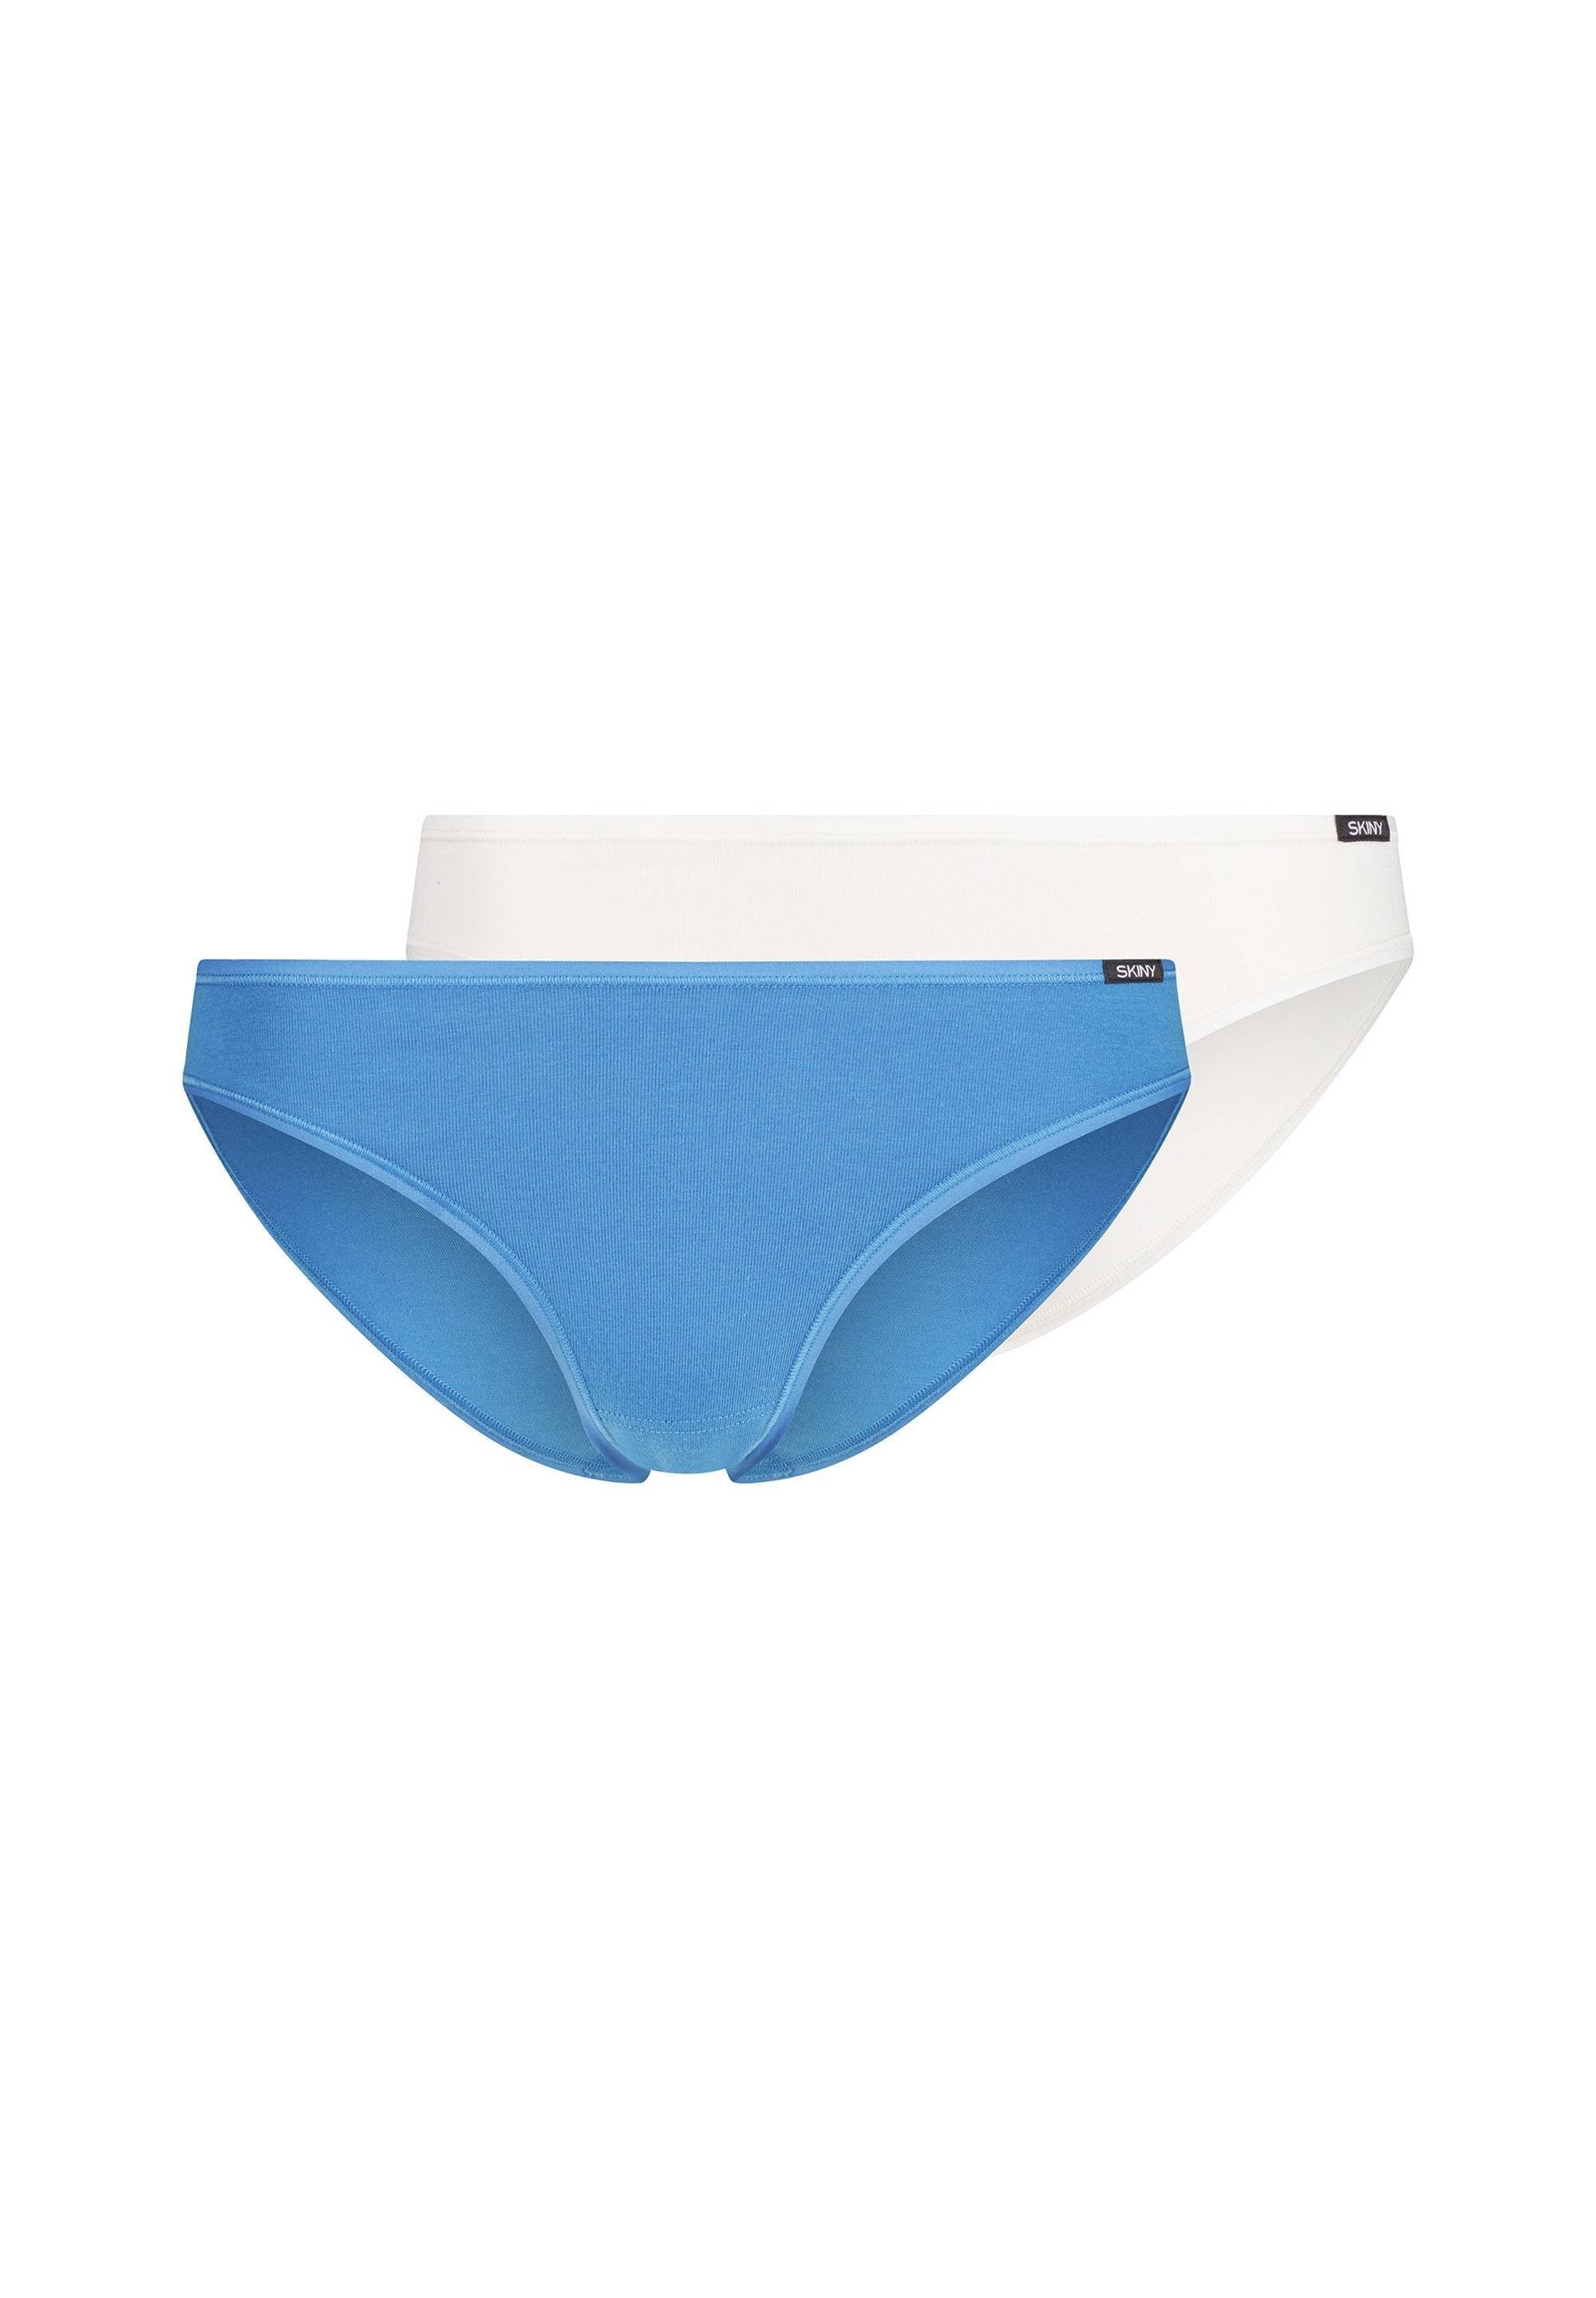 Skiny Slip Damen Rio Slip, 2er Pack - Bikini Slip, Cotton Hellblau/Weiß